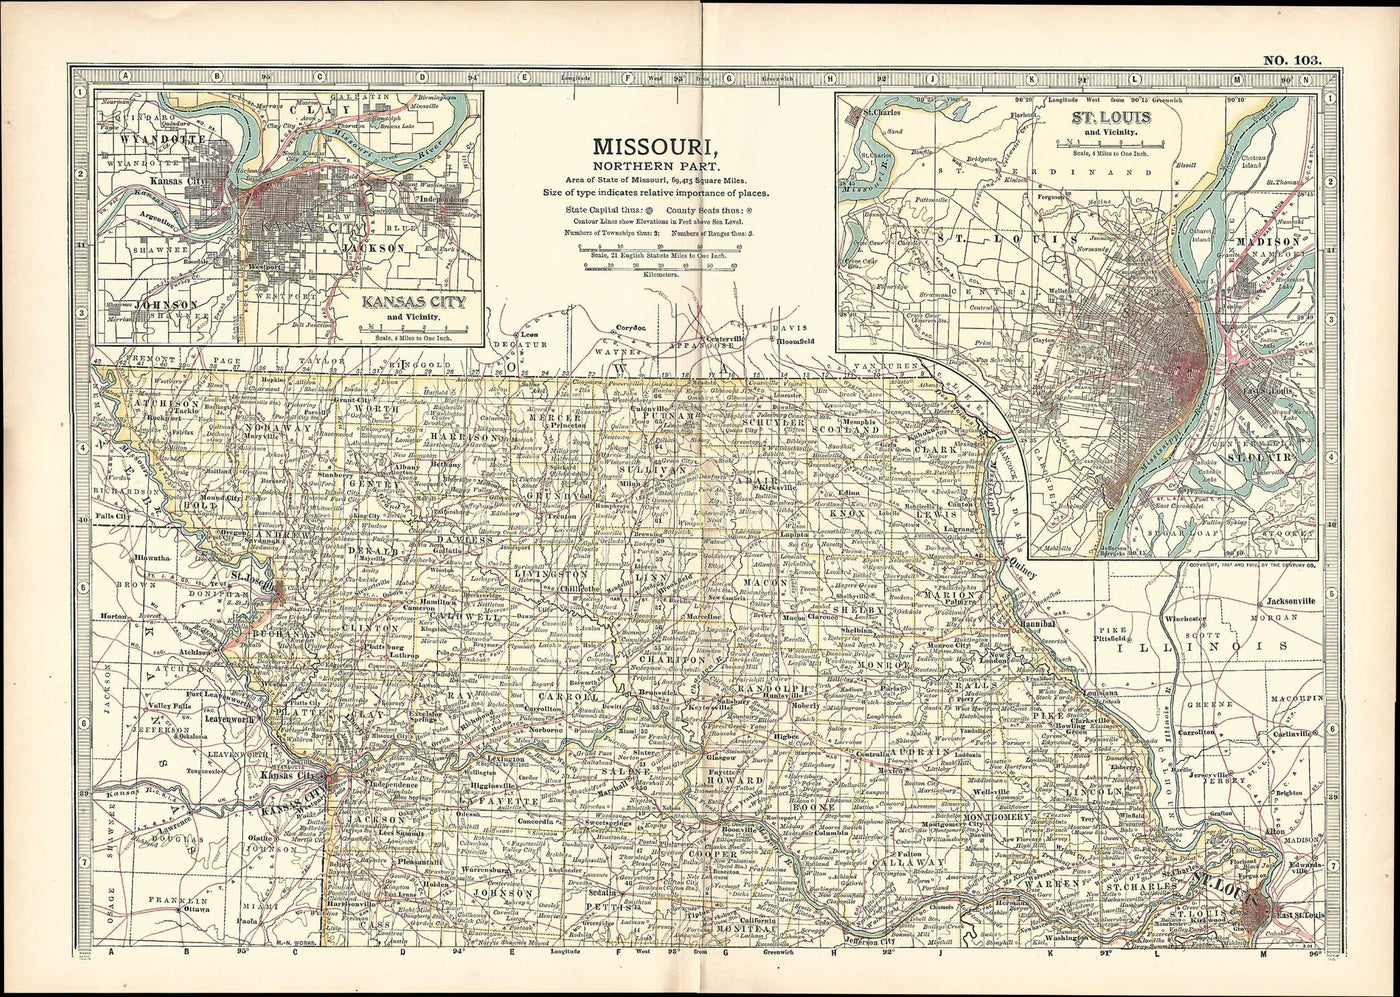 Missouri Northern Part antique map Encyclopaedia Britannica 1903